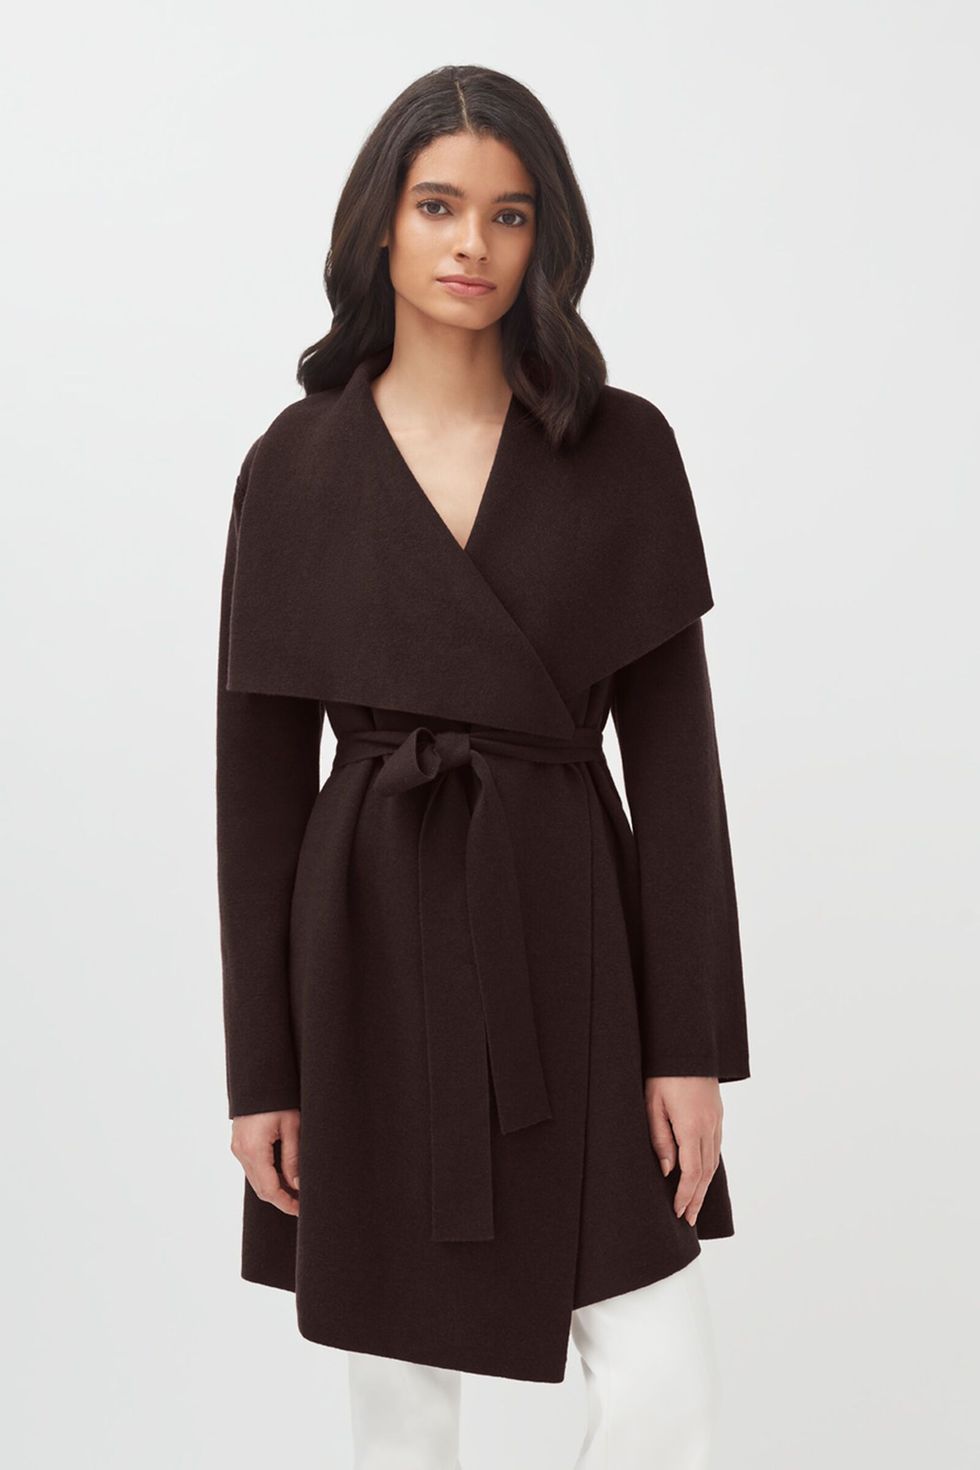 Cuyana Wool Cashmere Short Wrap Coat